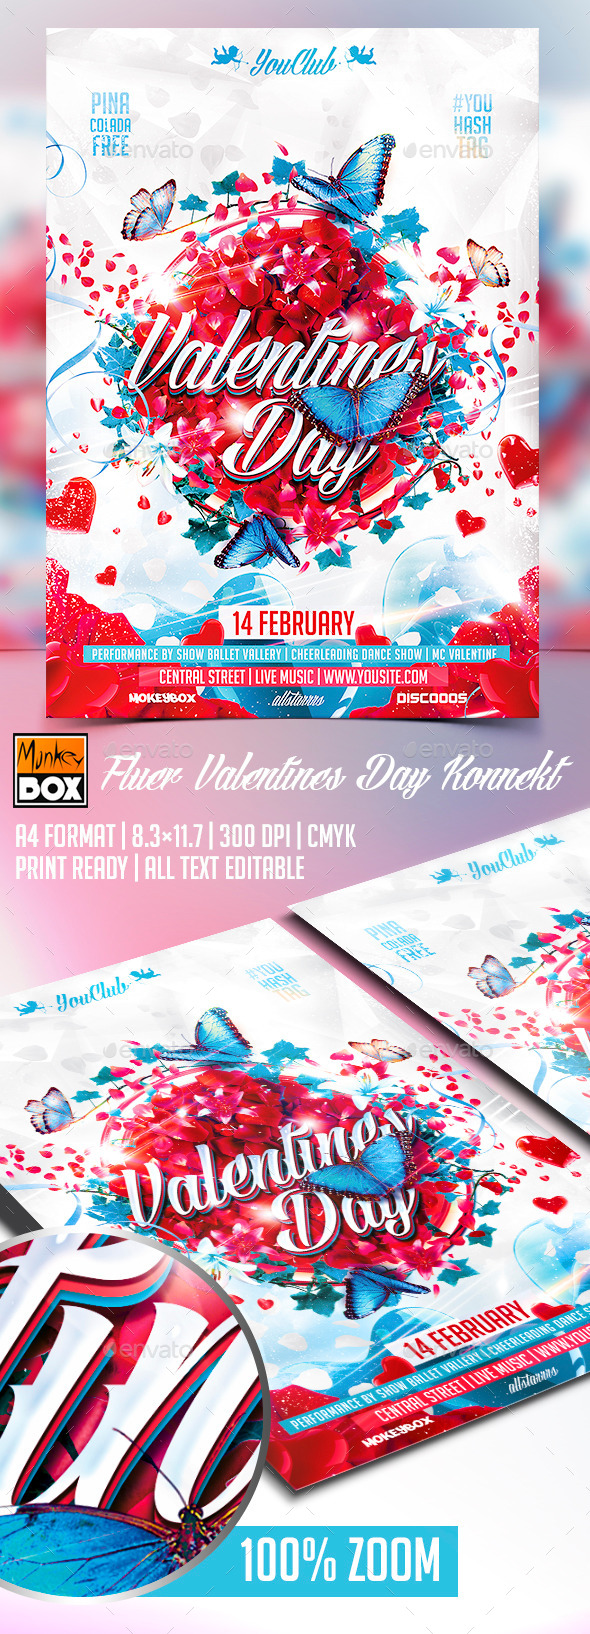 Flyer Valentines Day Konnekt